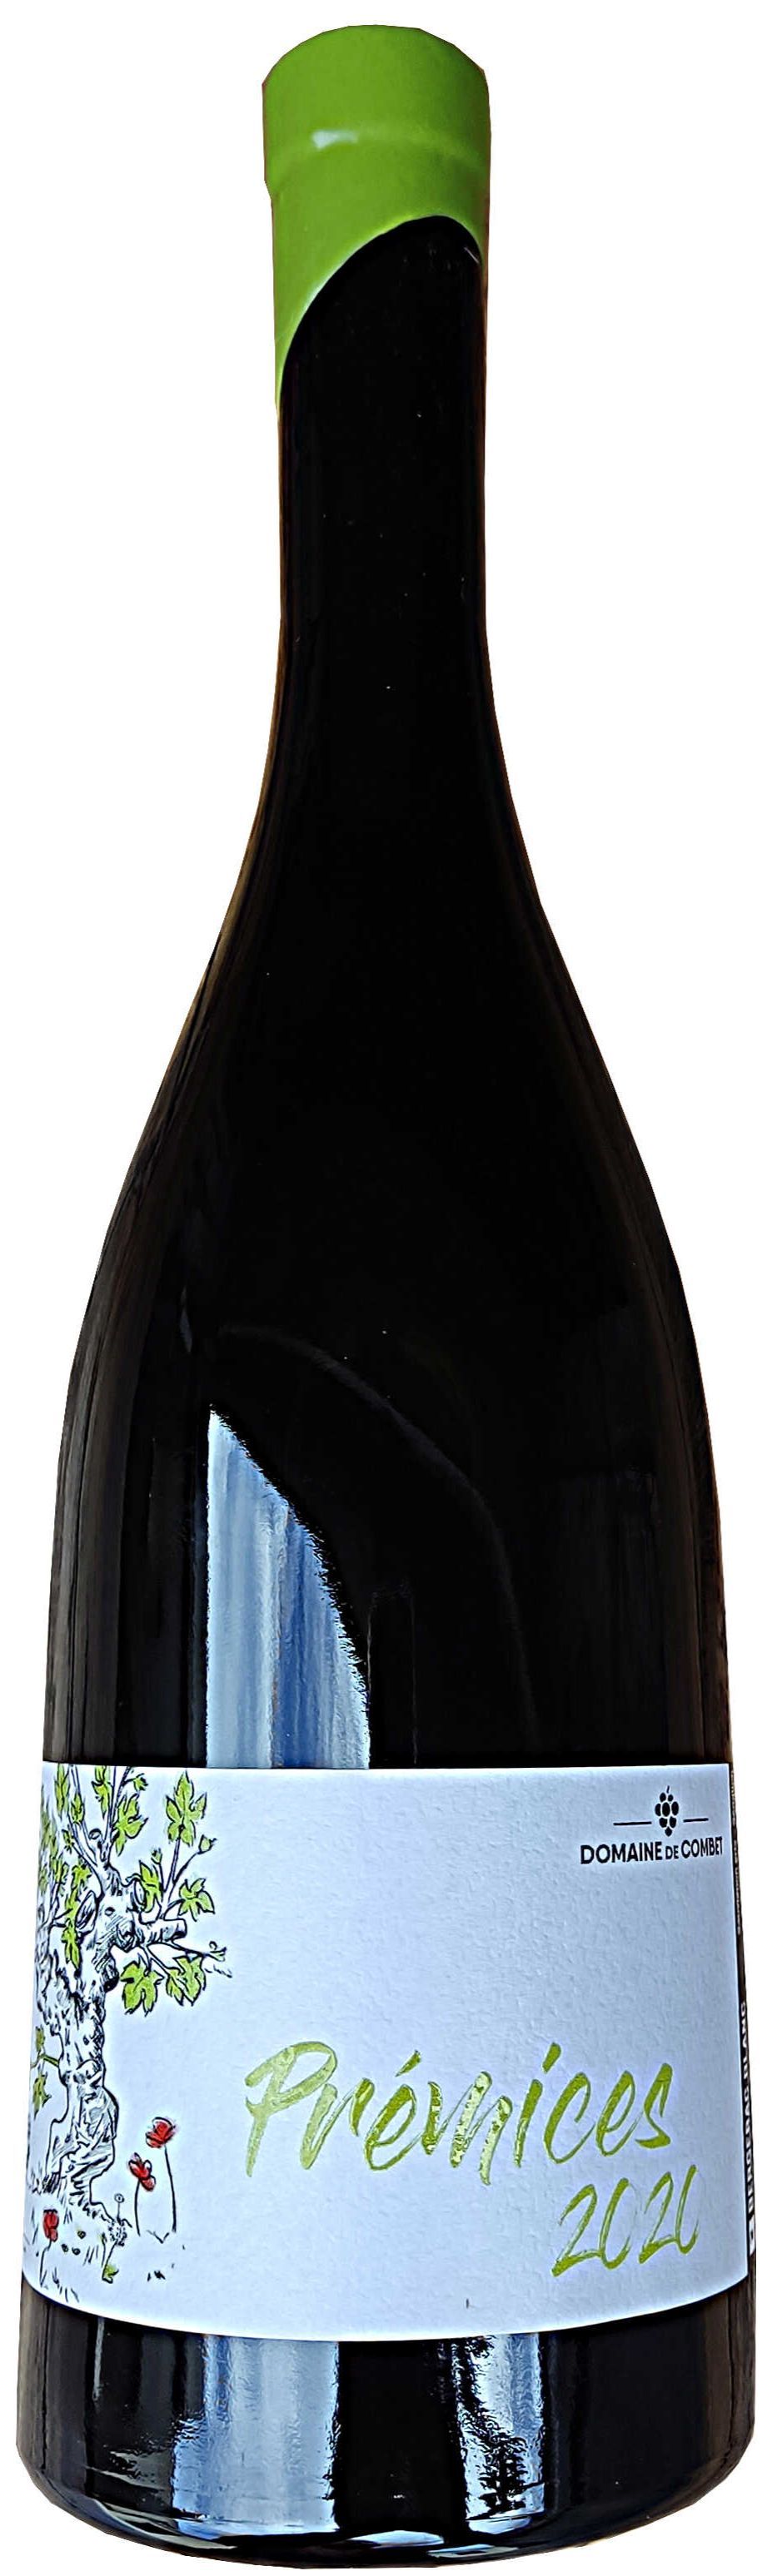 Earl de Combet PREMICES, Weiß, 2021, Bergerac. Bottle image